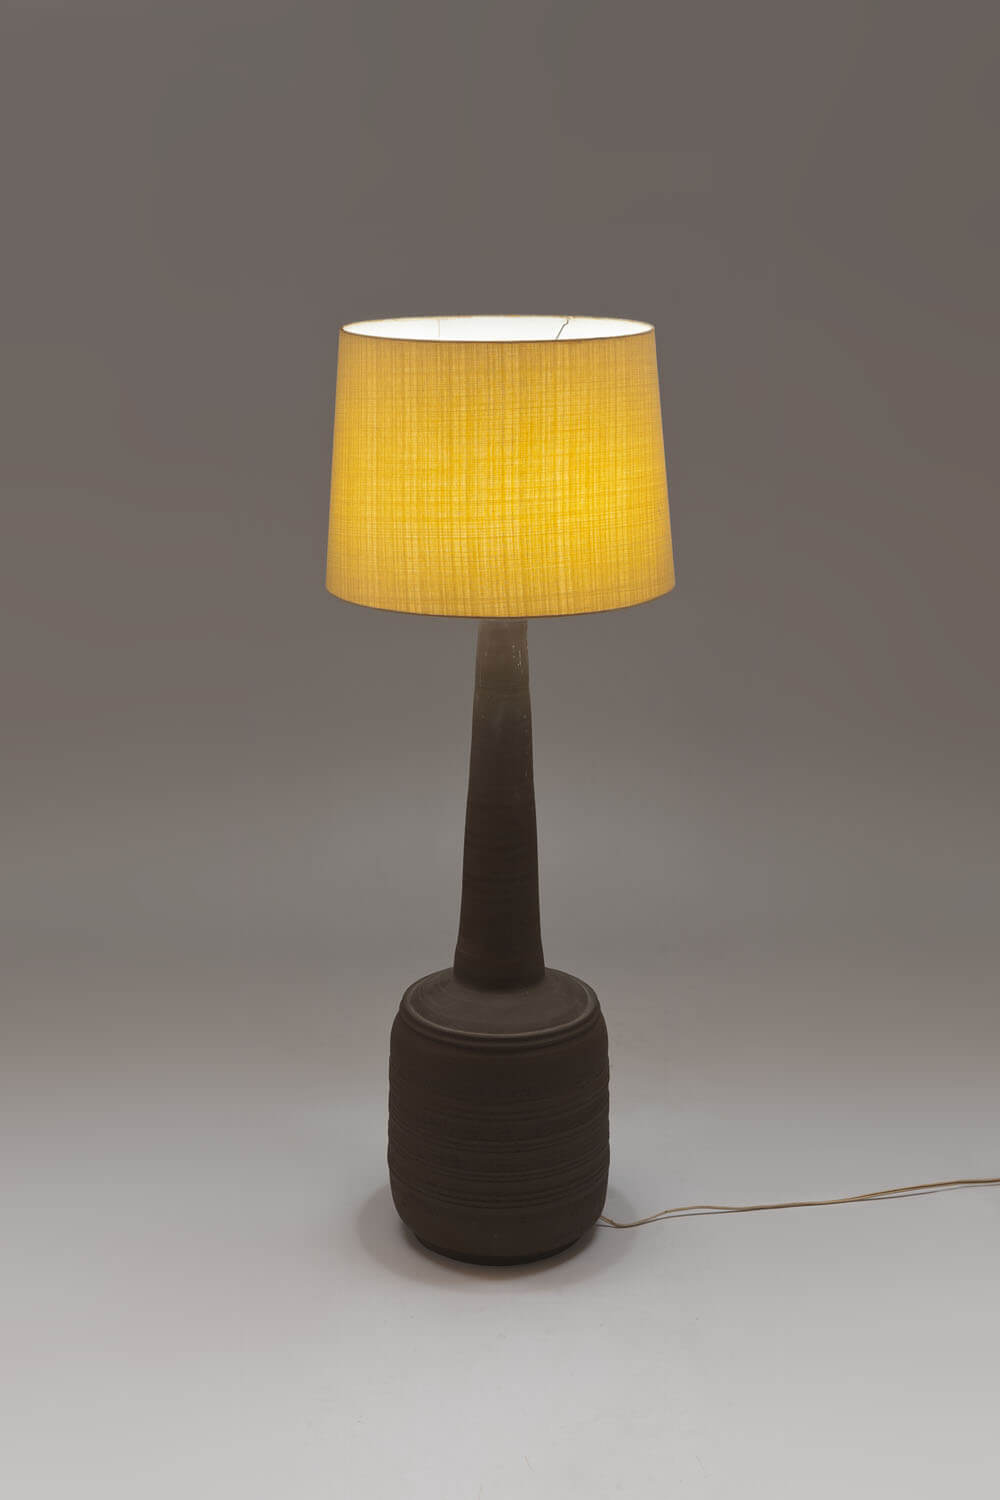 Vintage Deens Keramieken vloerlamp